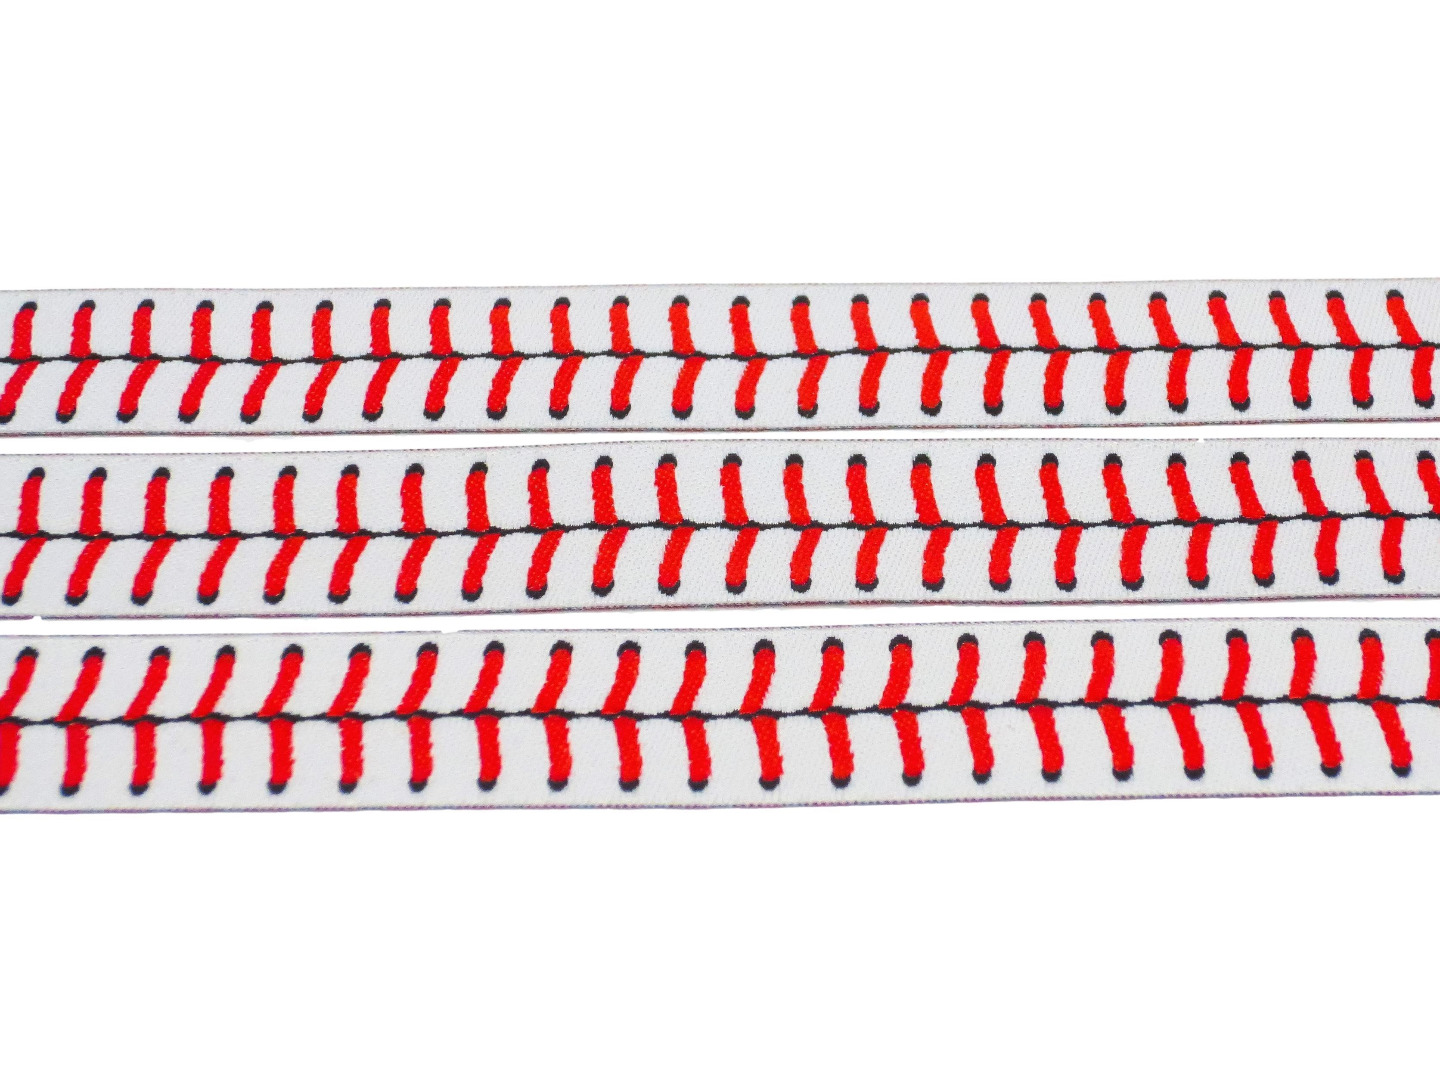 Baseball Webband - Baseballnaht - weiss mit roter Naht